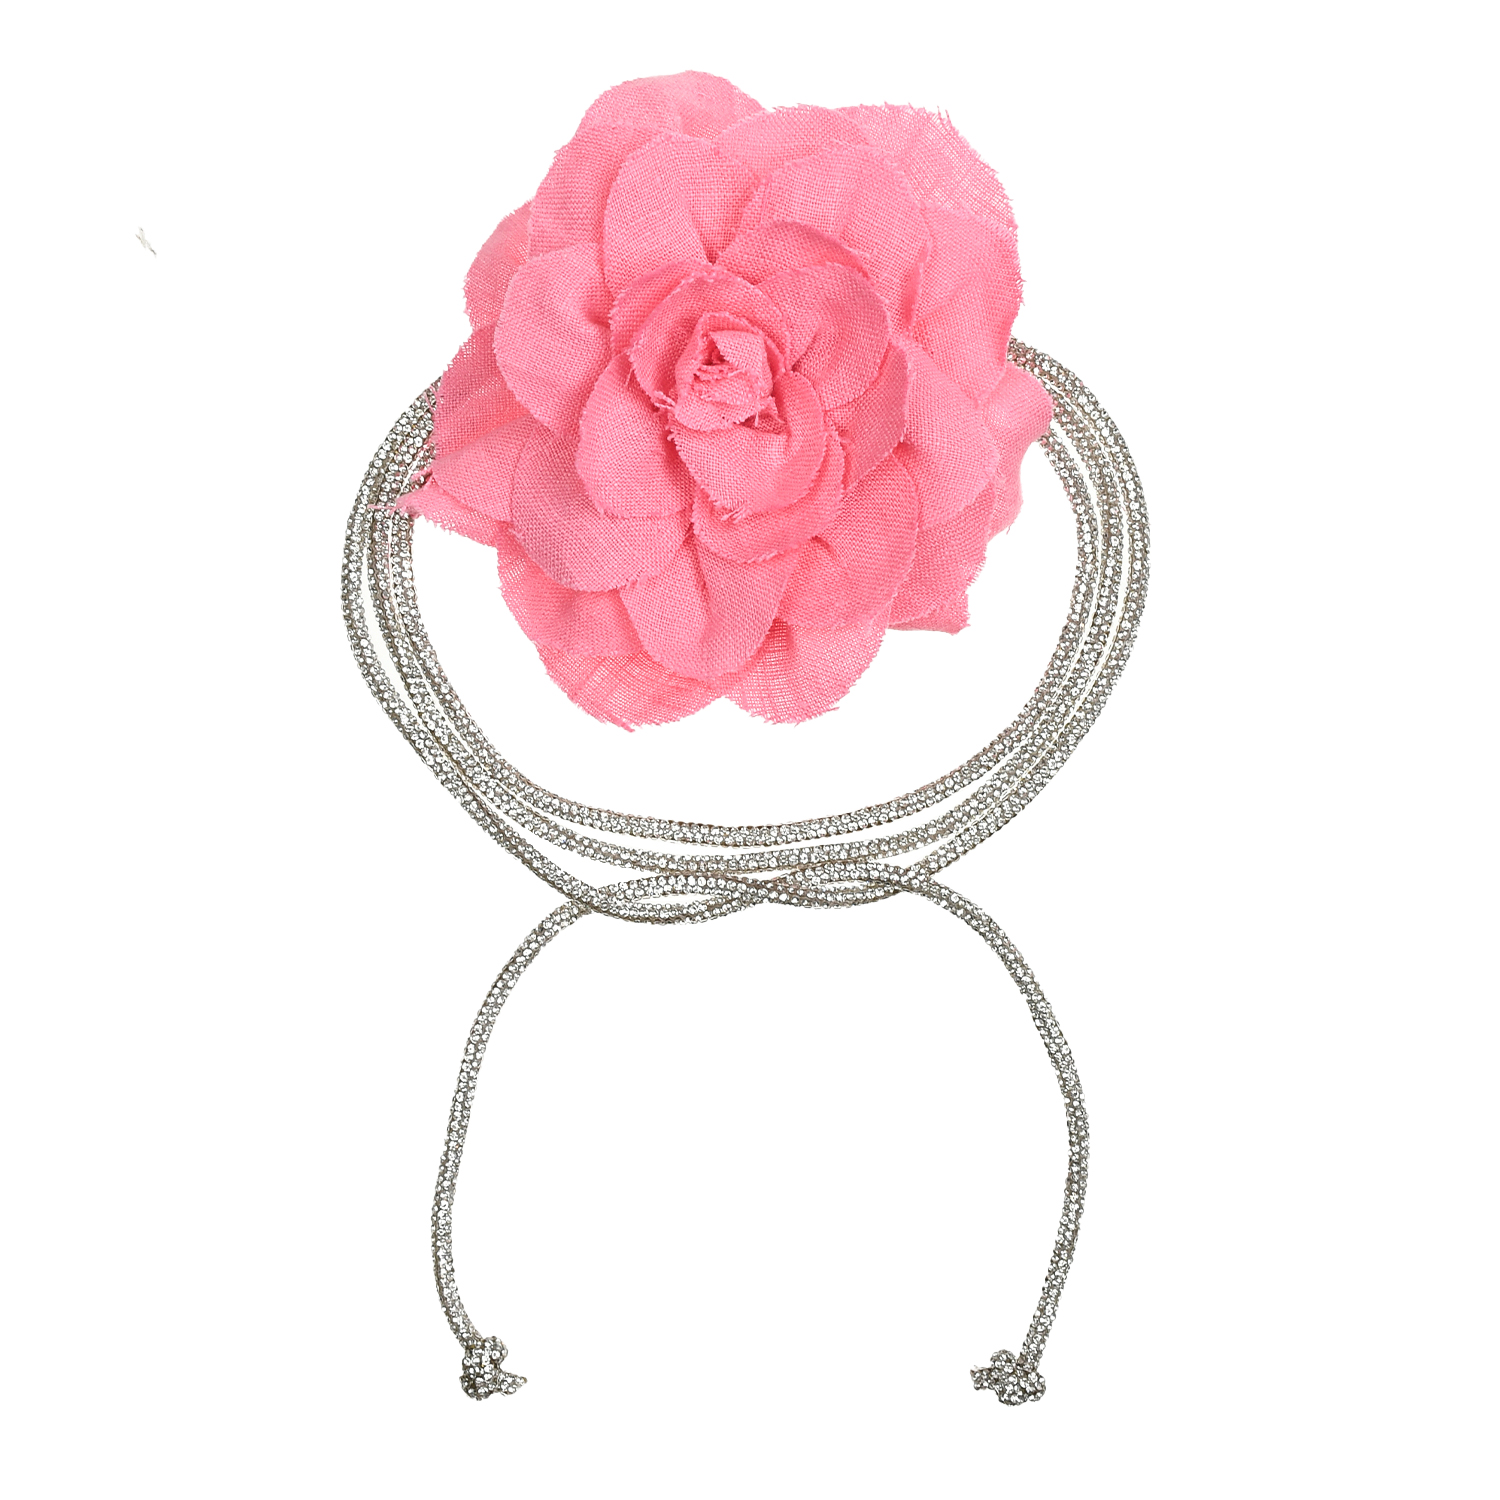 Аксессуар цветок из льна, розовый ALINE, размер unica